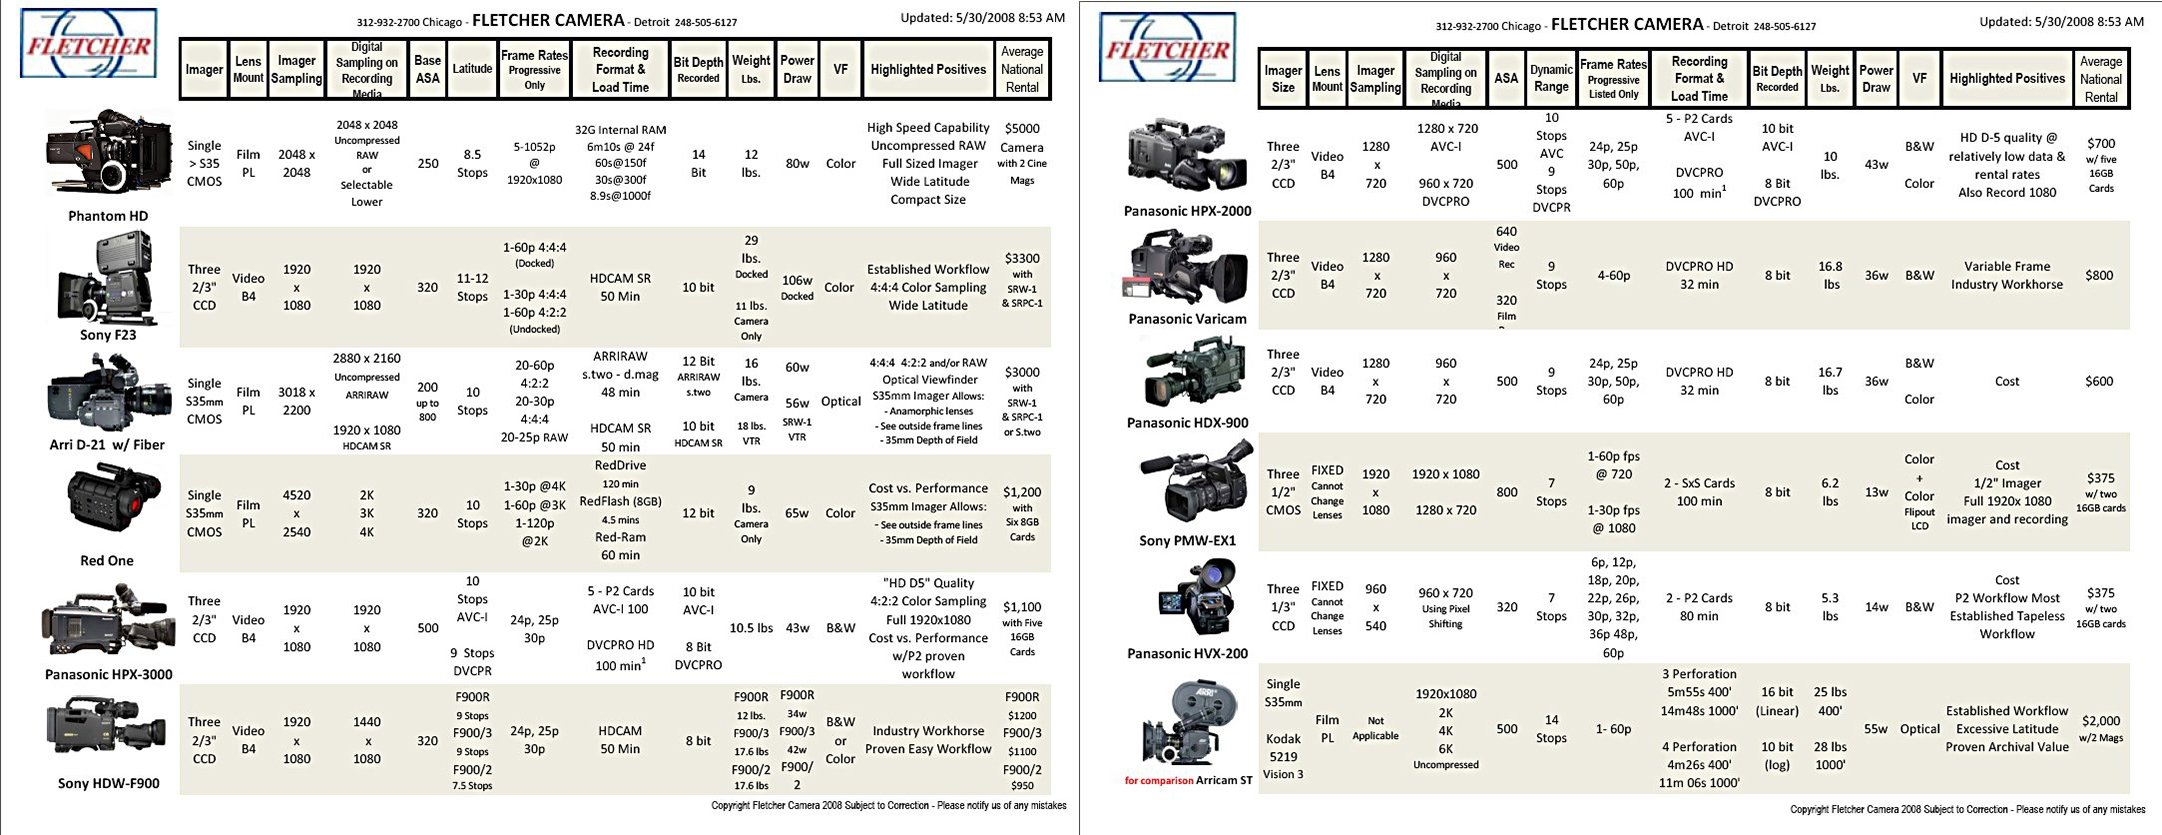 Canon Dslr Model Comparison Chart